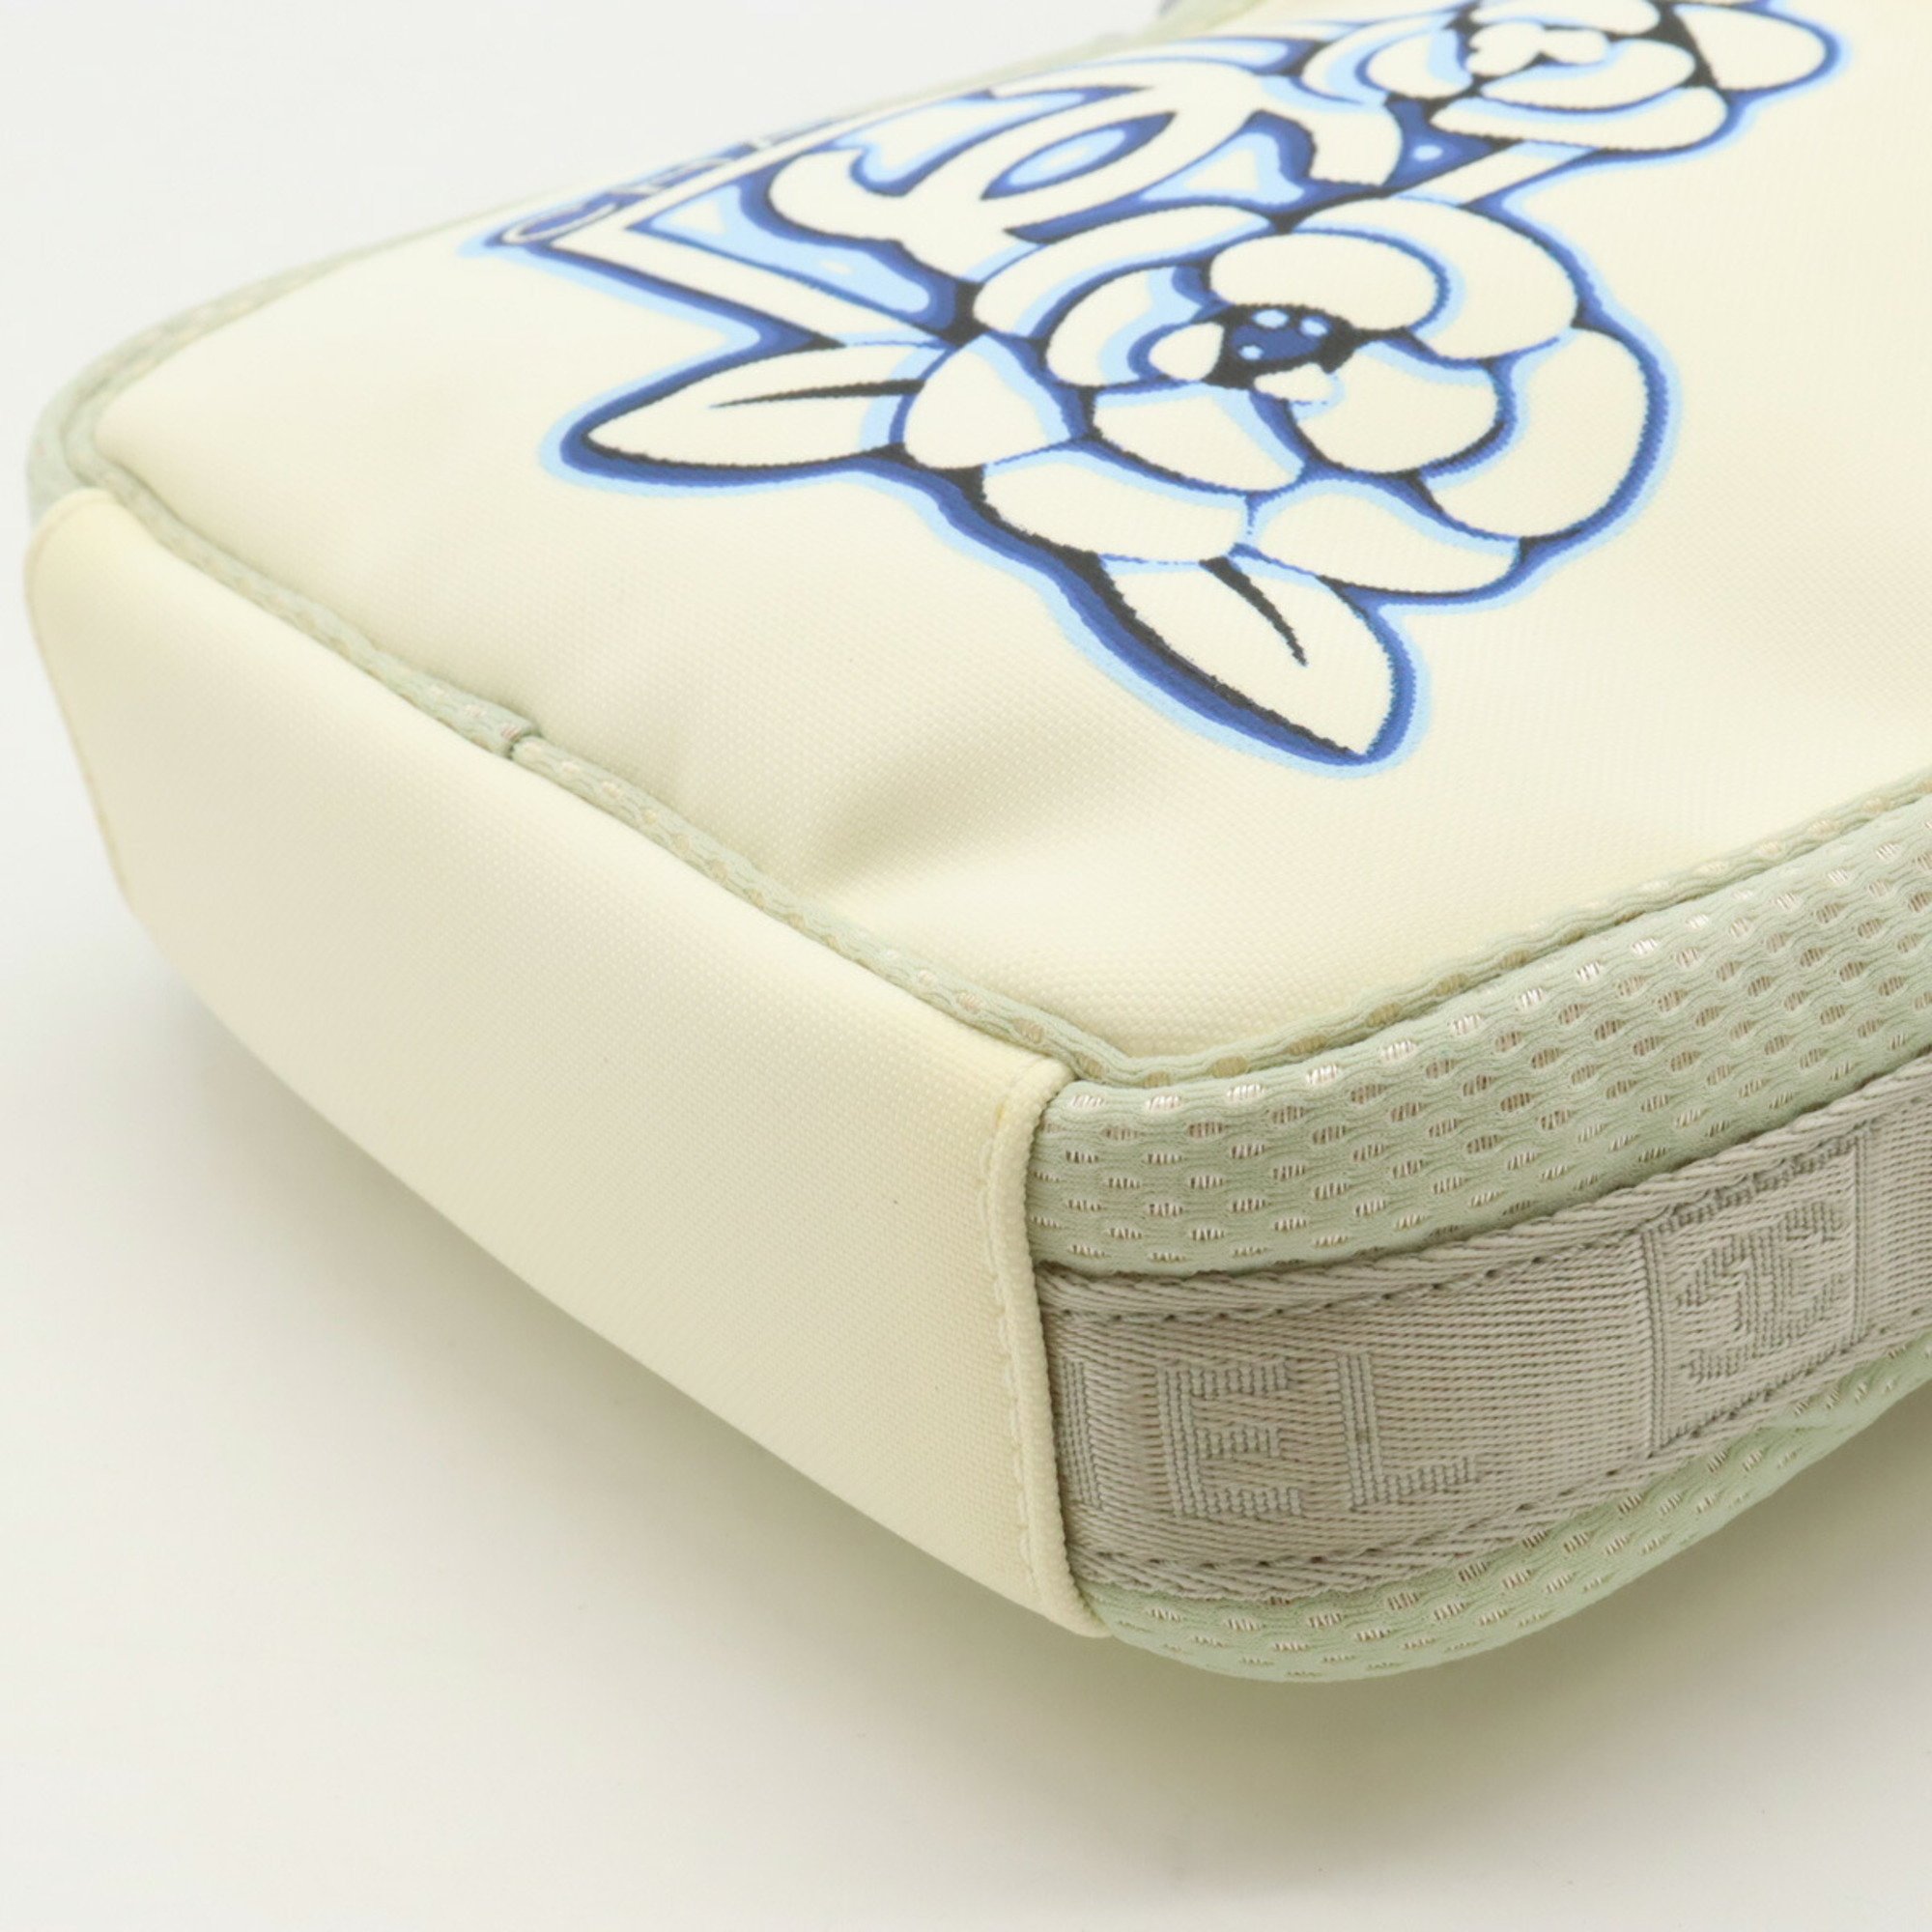 CHANEL Sport Line Camellia Shoulder Bag Pochette Nylon Canvas Ivory White Blue Grey